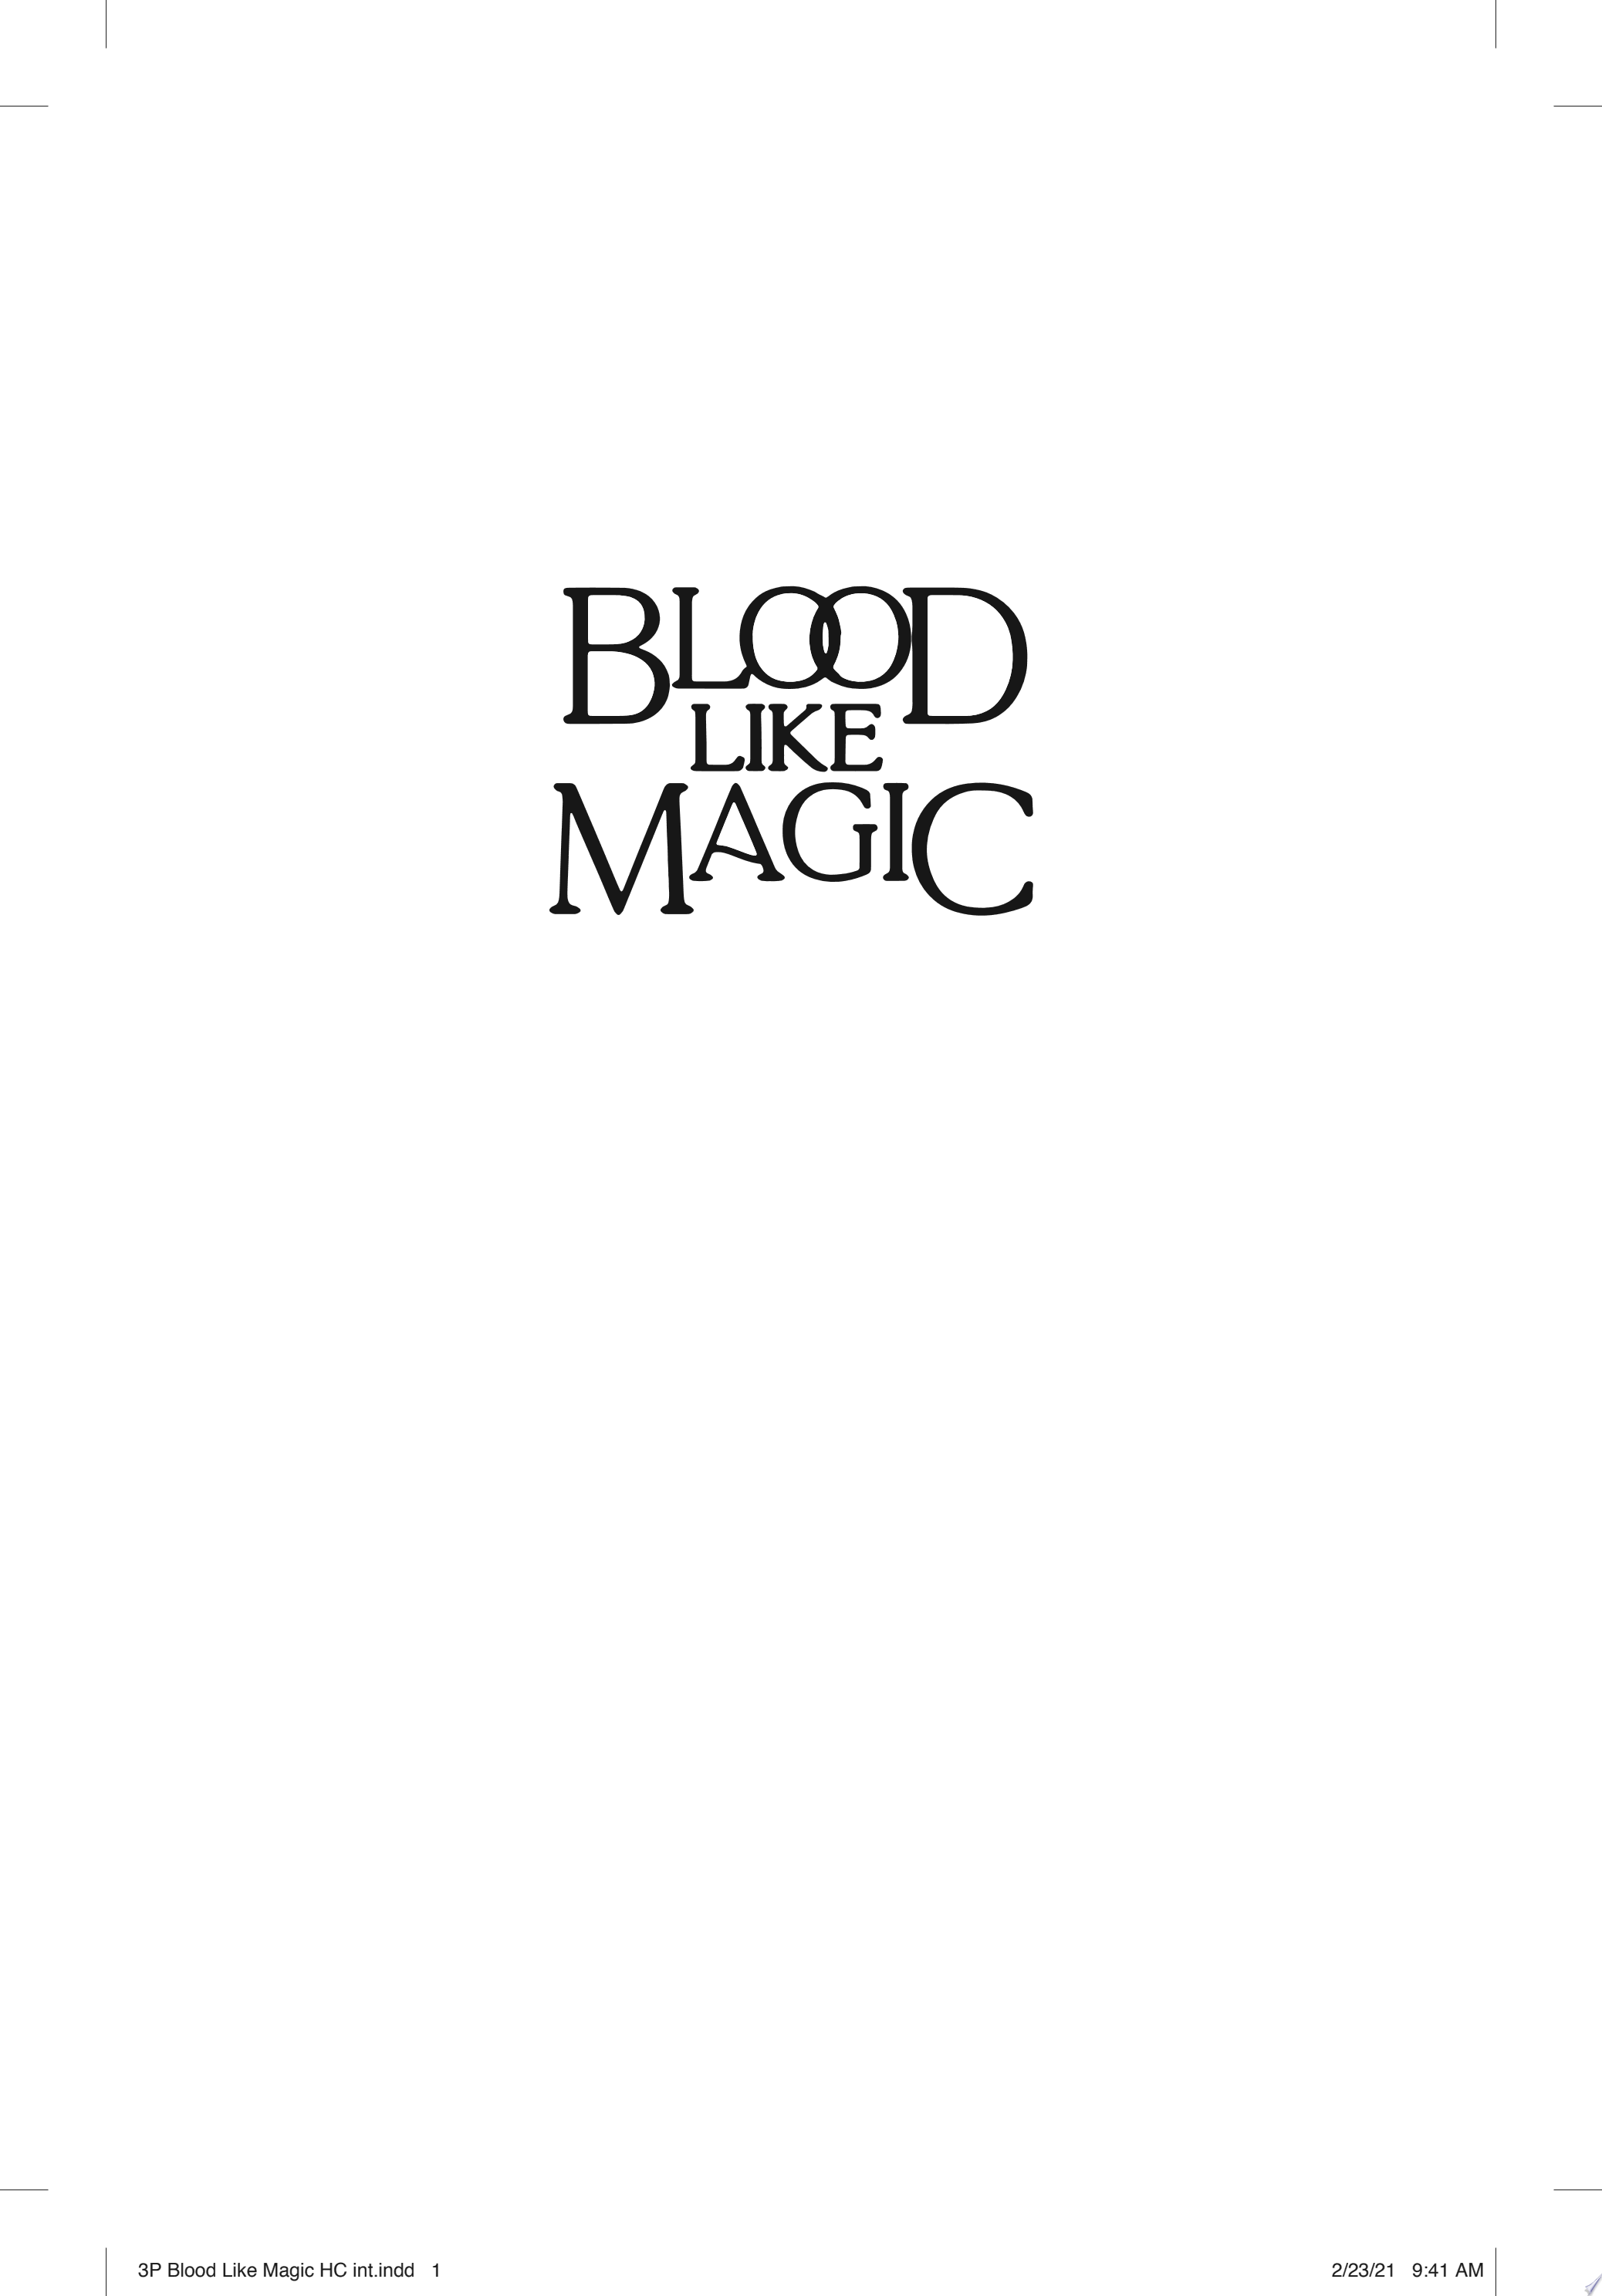 Image for "Blood Like Magic"